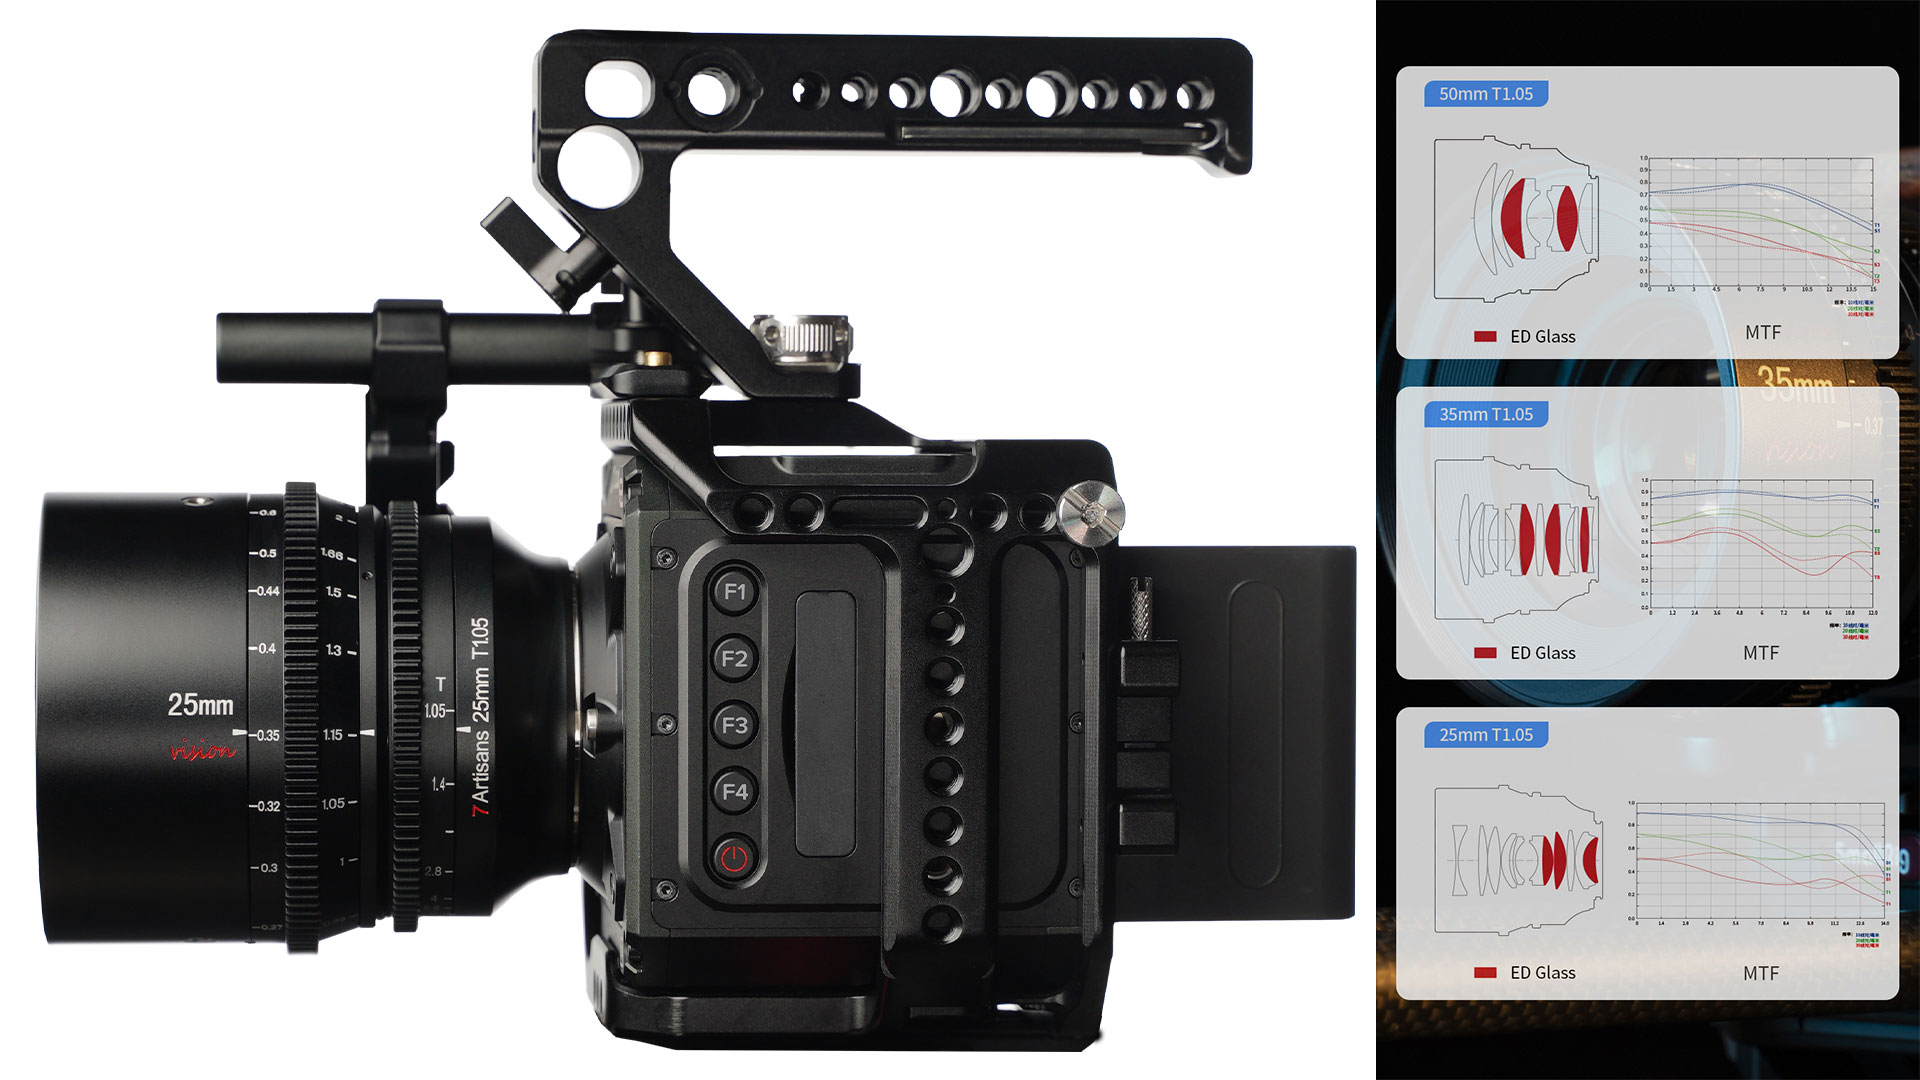 7artisans Vision 25, 35, 50mm T1.05 - New APS-C Cinema Lenses | CineD